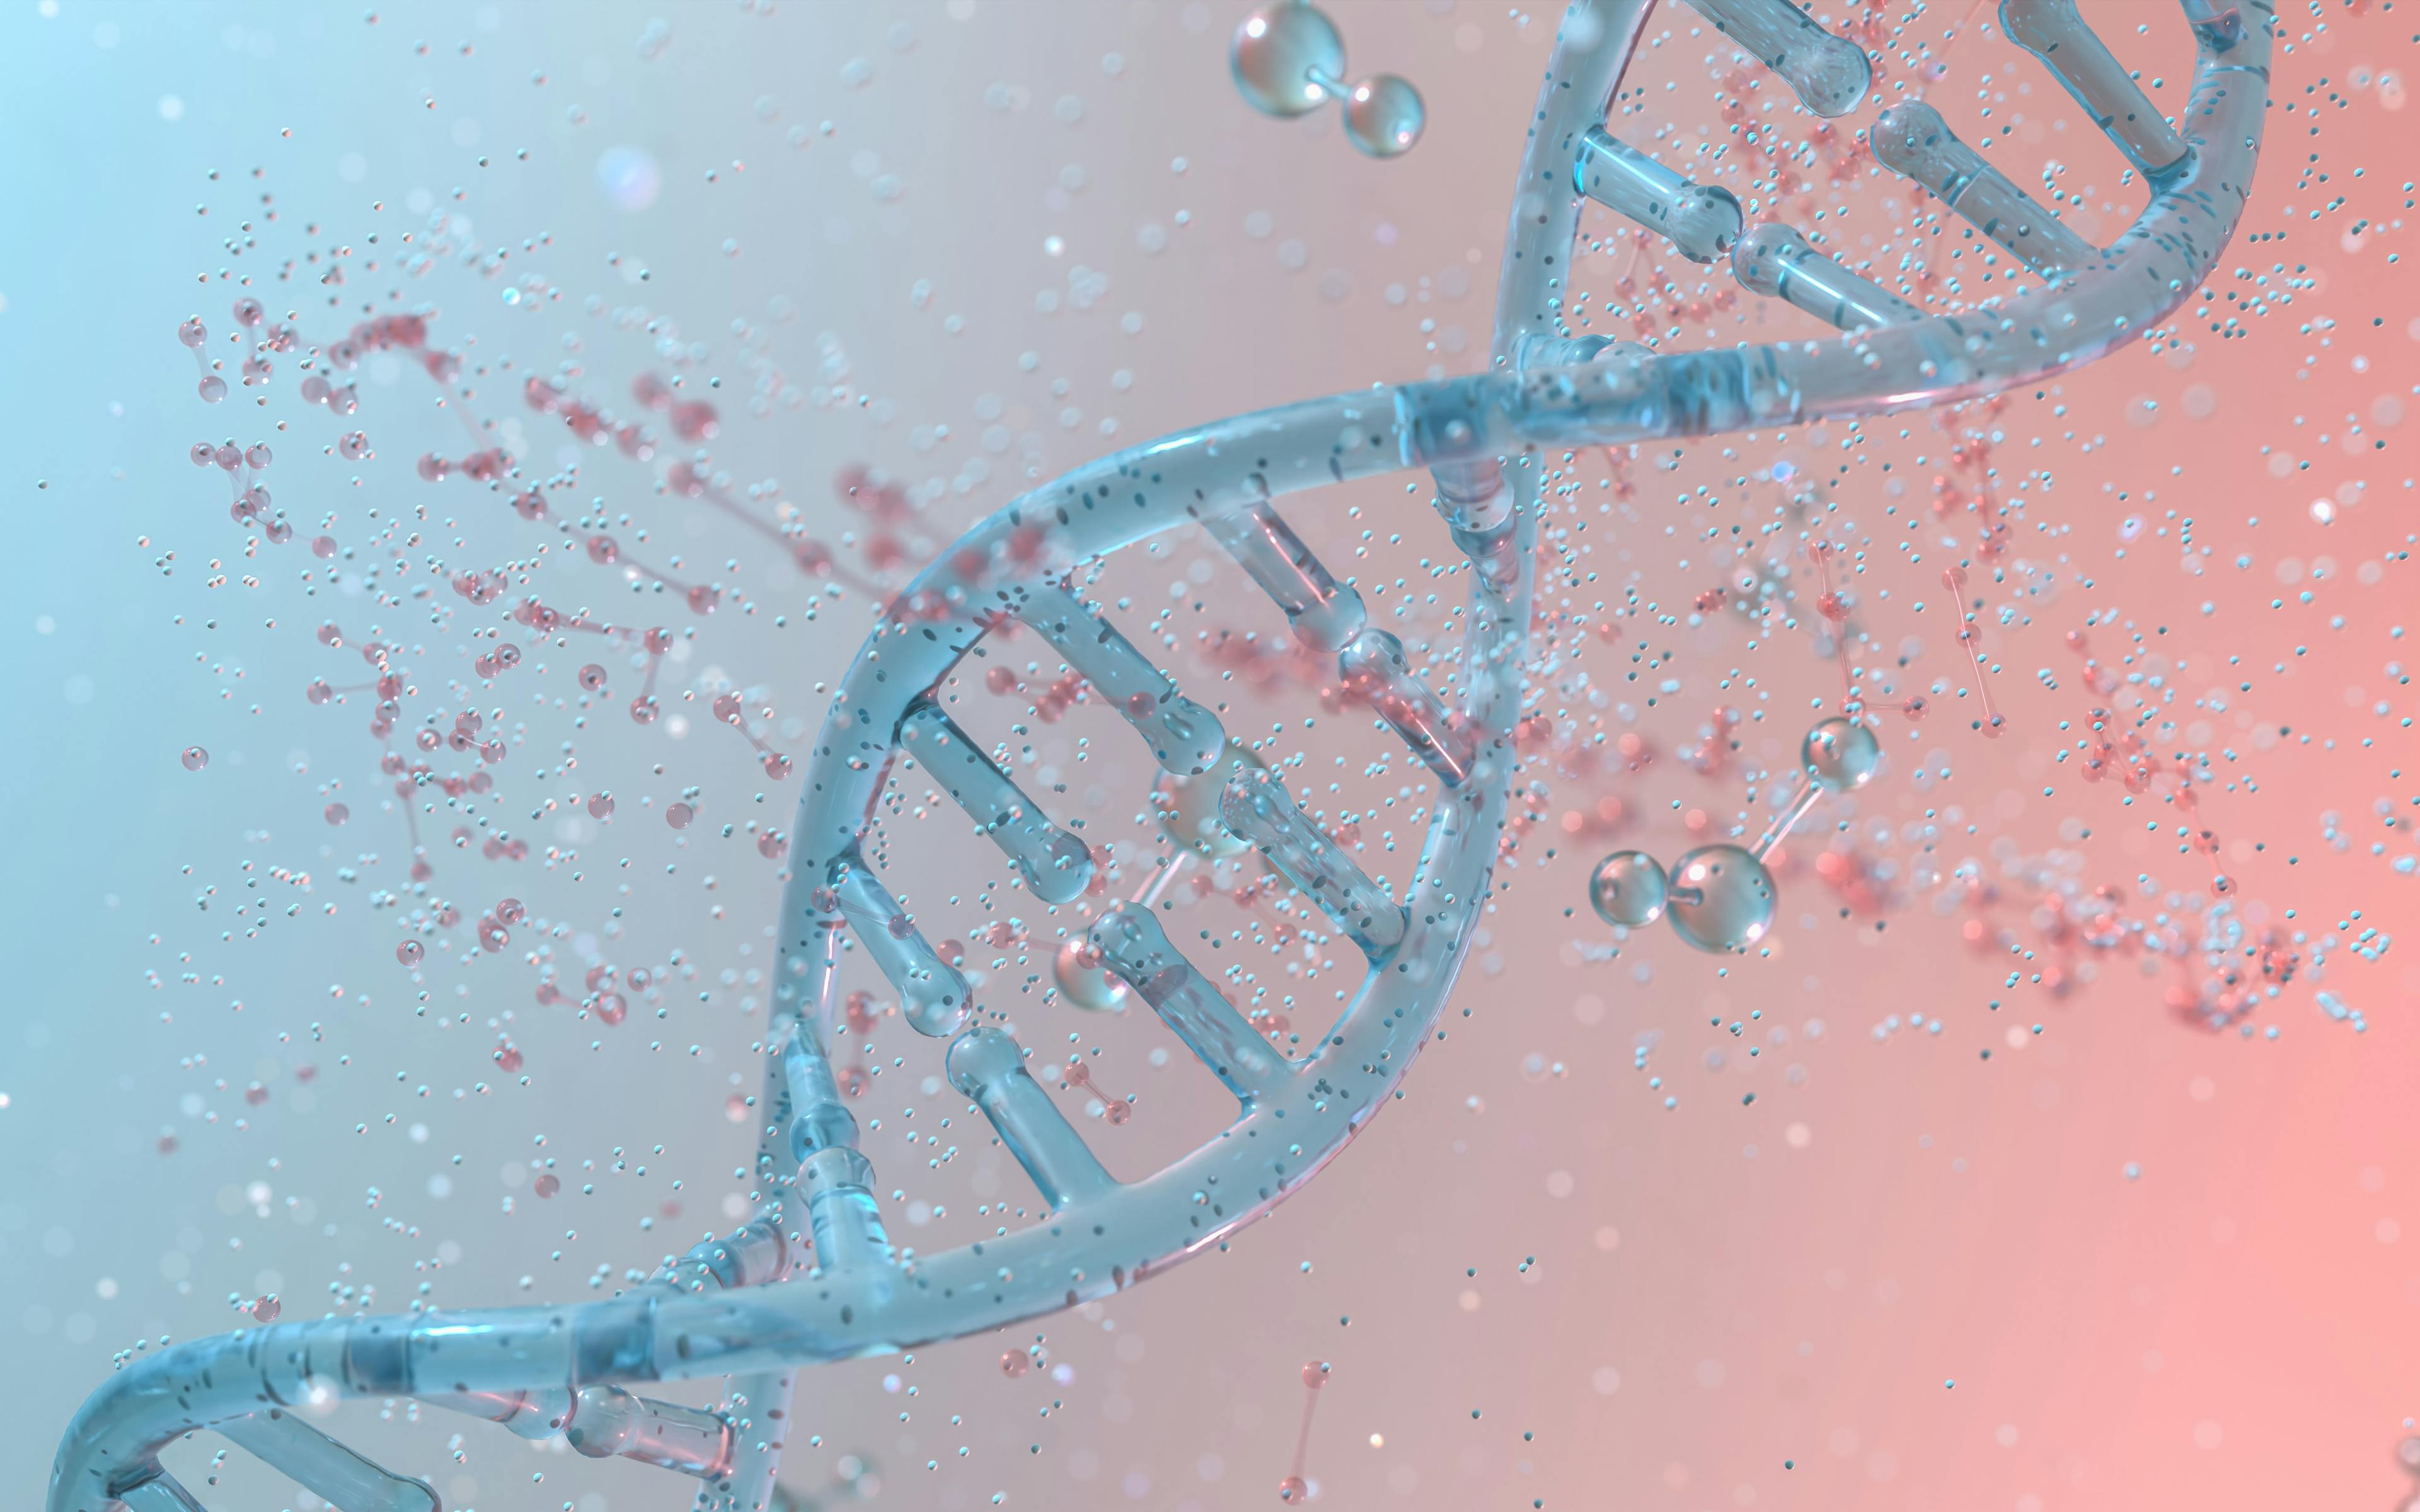 DNA genomes structure with division molecule, 3d rendering. | Image Credit: © Vink Fan - stock.adobe.com 